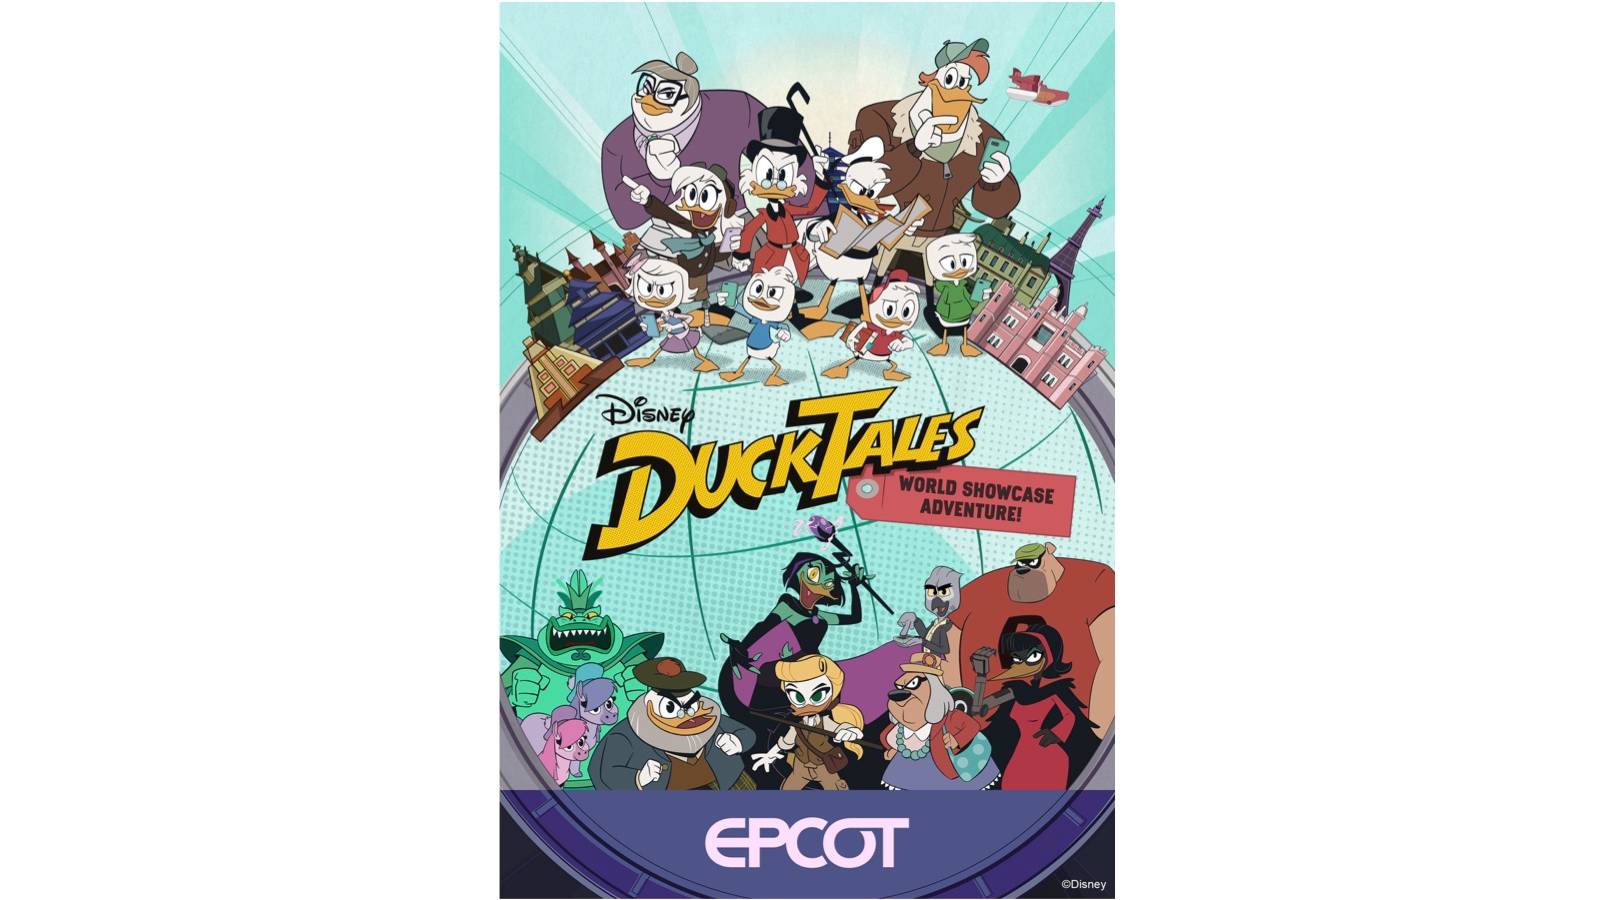 Disney's DuckTales World Showcase Adventure to open in Epcot